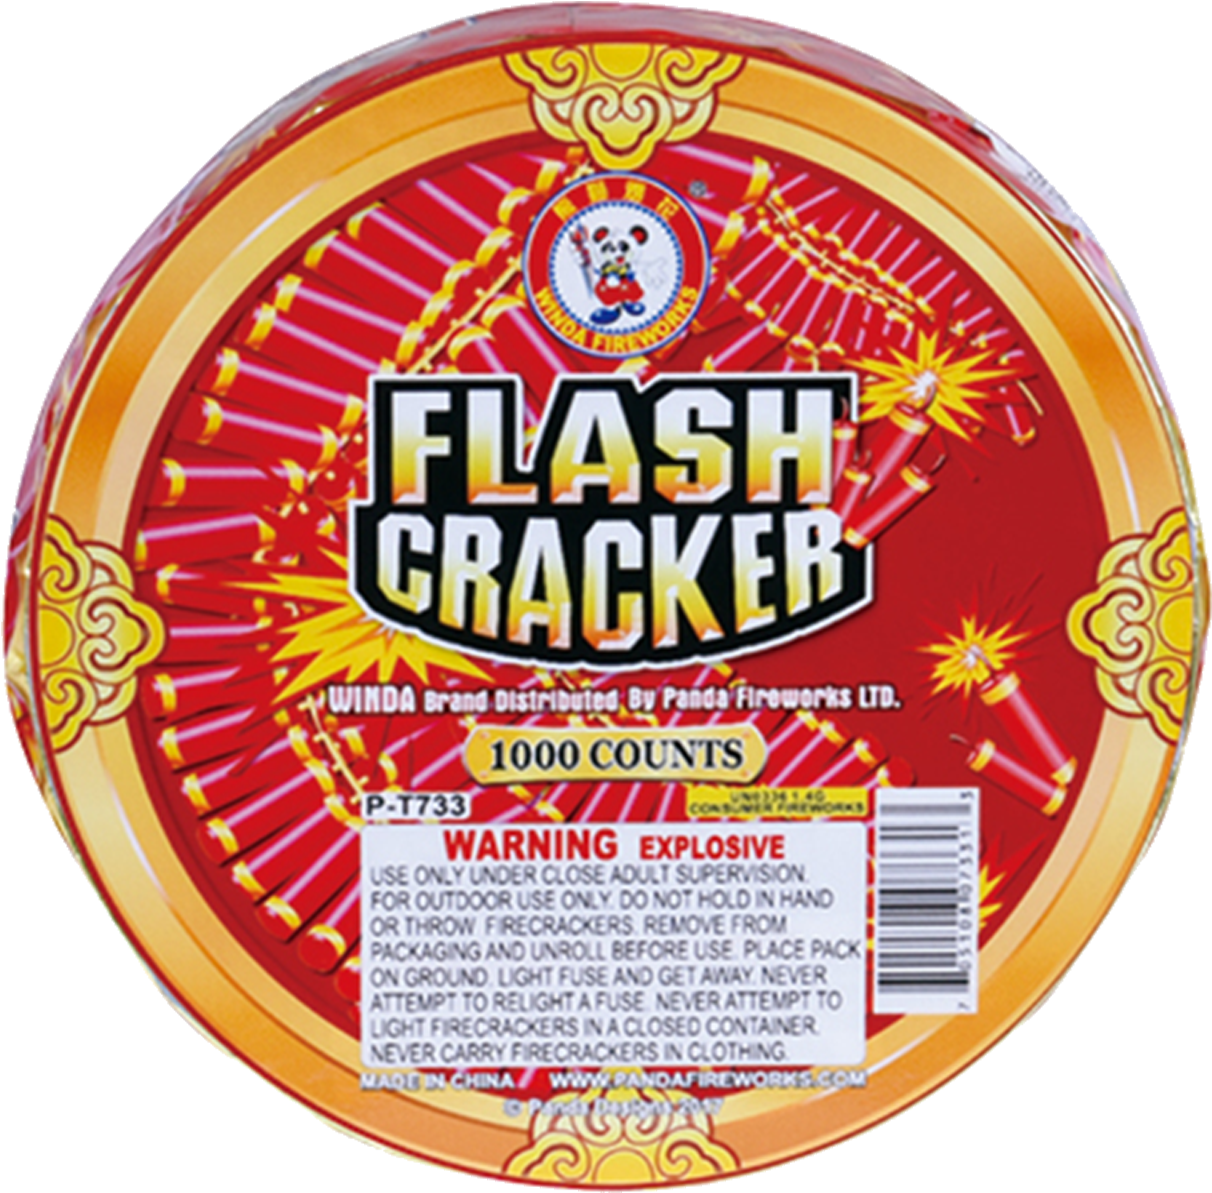 Flash Cracker1000 Counts Packaging